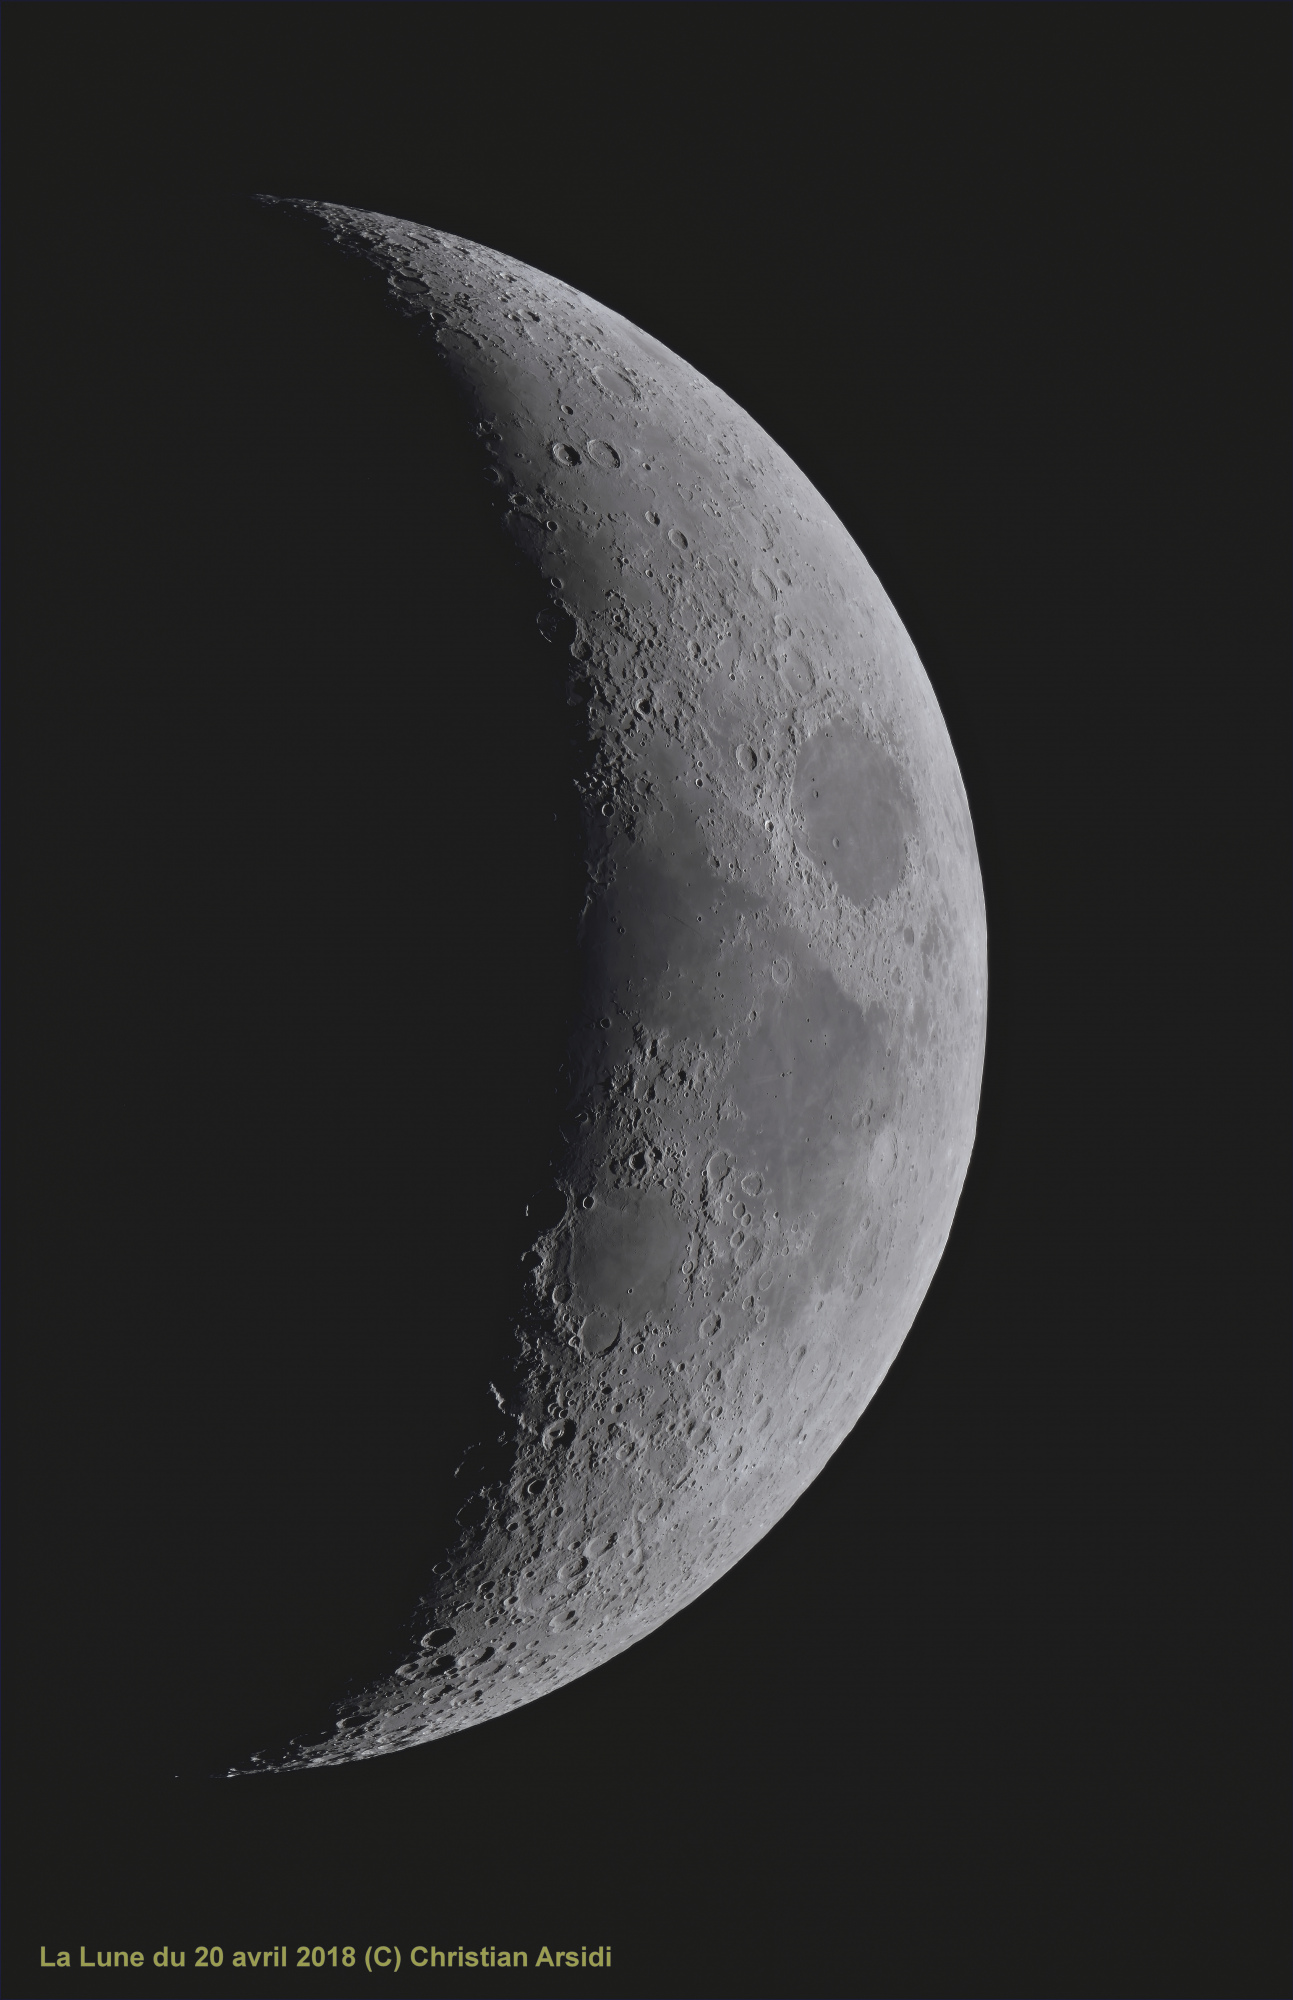 La Lune 35 images traitée_DxO-1 1 JPEG V 2.jpg